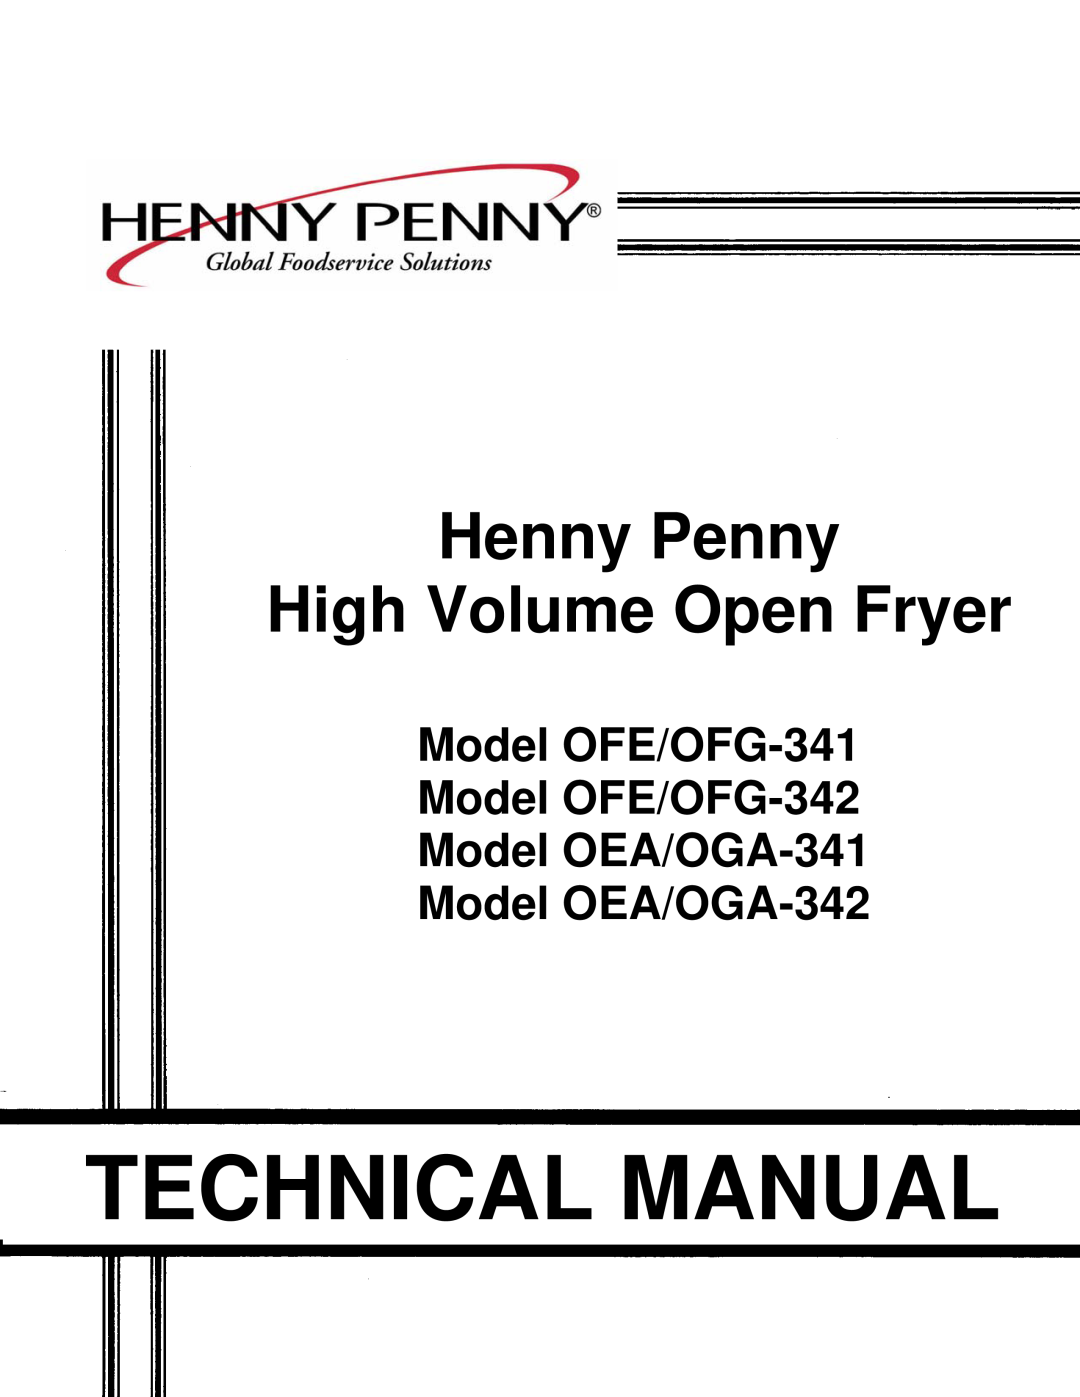 Henny Penny OFE/OFG-341, OFE/OFG-342, OEA/OGA-342 technical manual Technical Manual, Henny Penny High Volume Open Fryer 